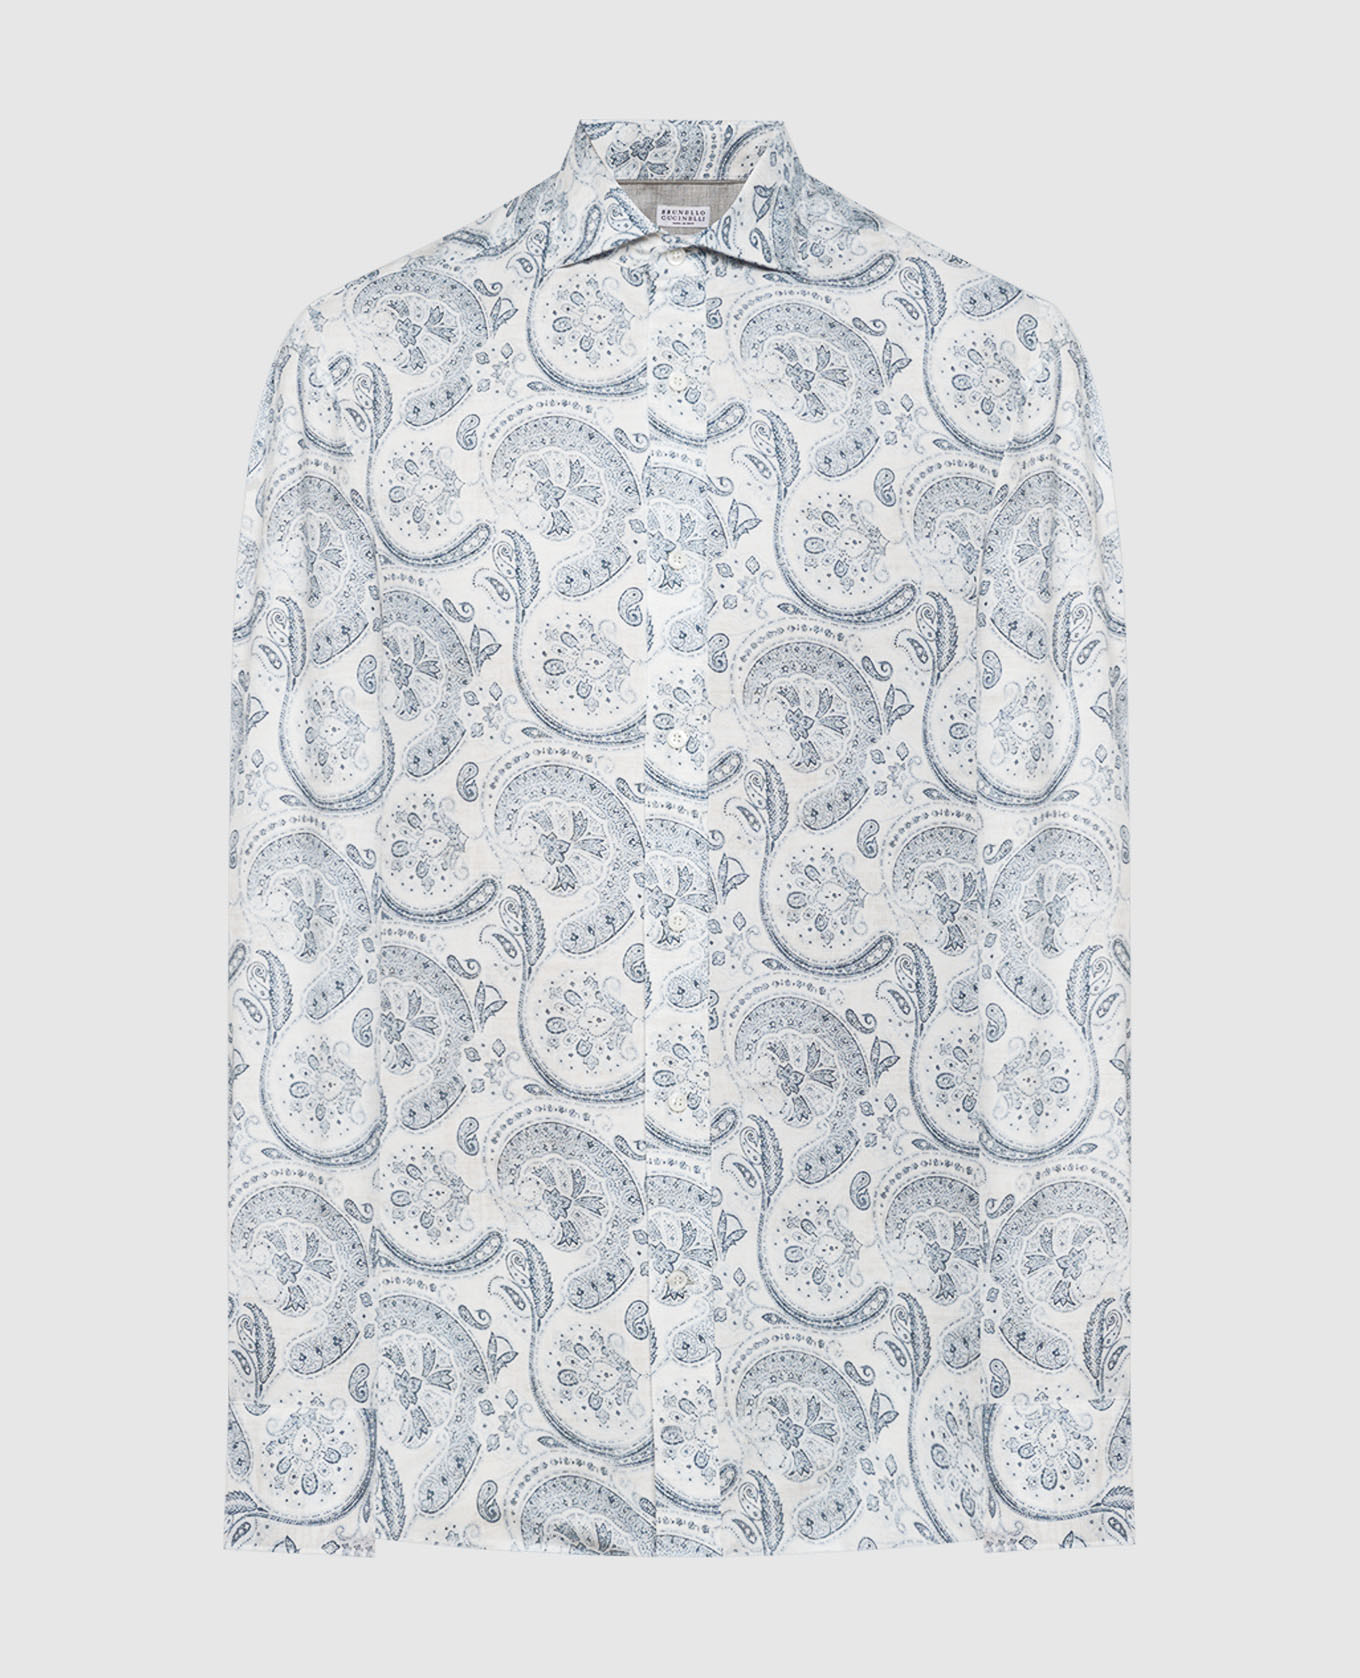 White shirt in paisley print